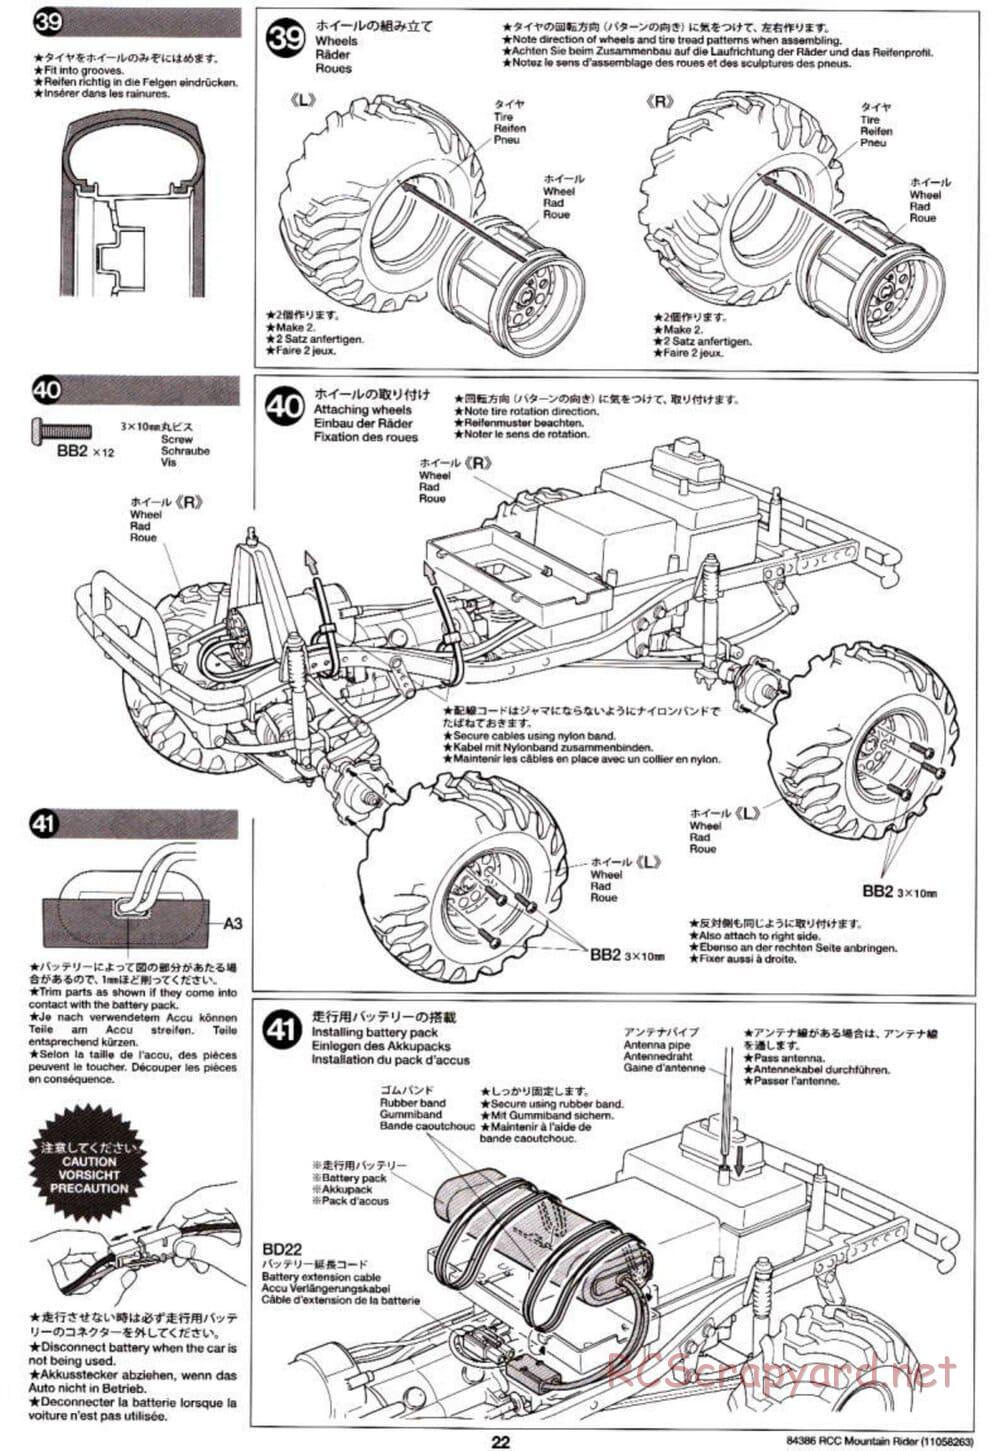 Tamiya - Toyota 4x4 Pick-Up Mountain Rider Chassis - Manual - Page 22